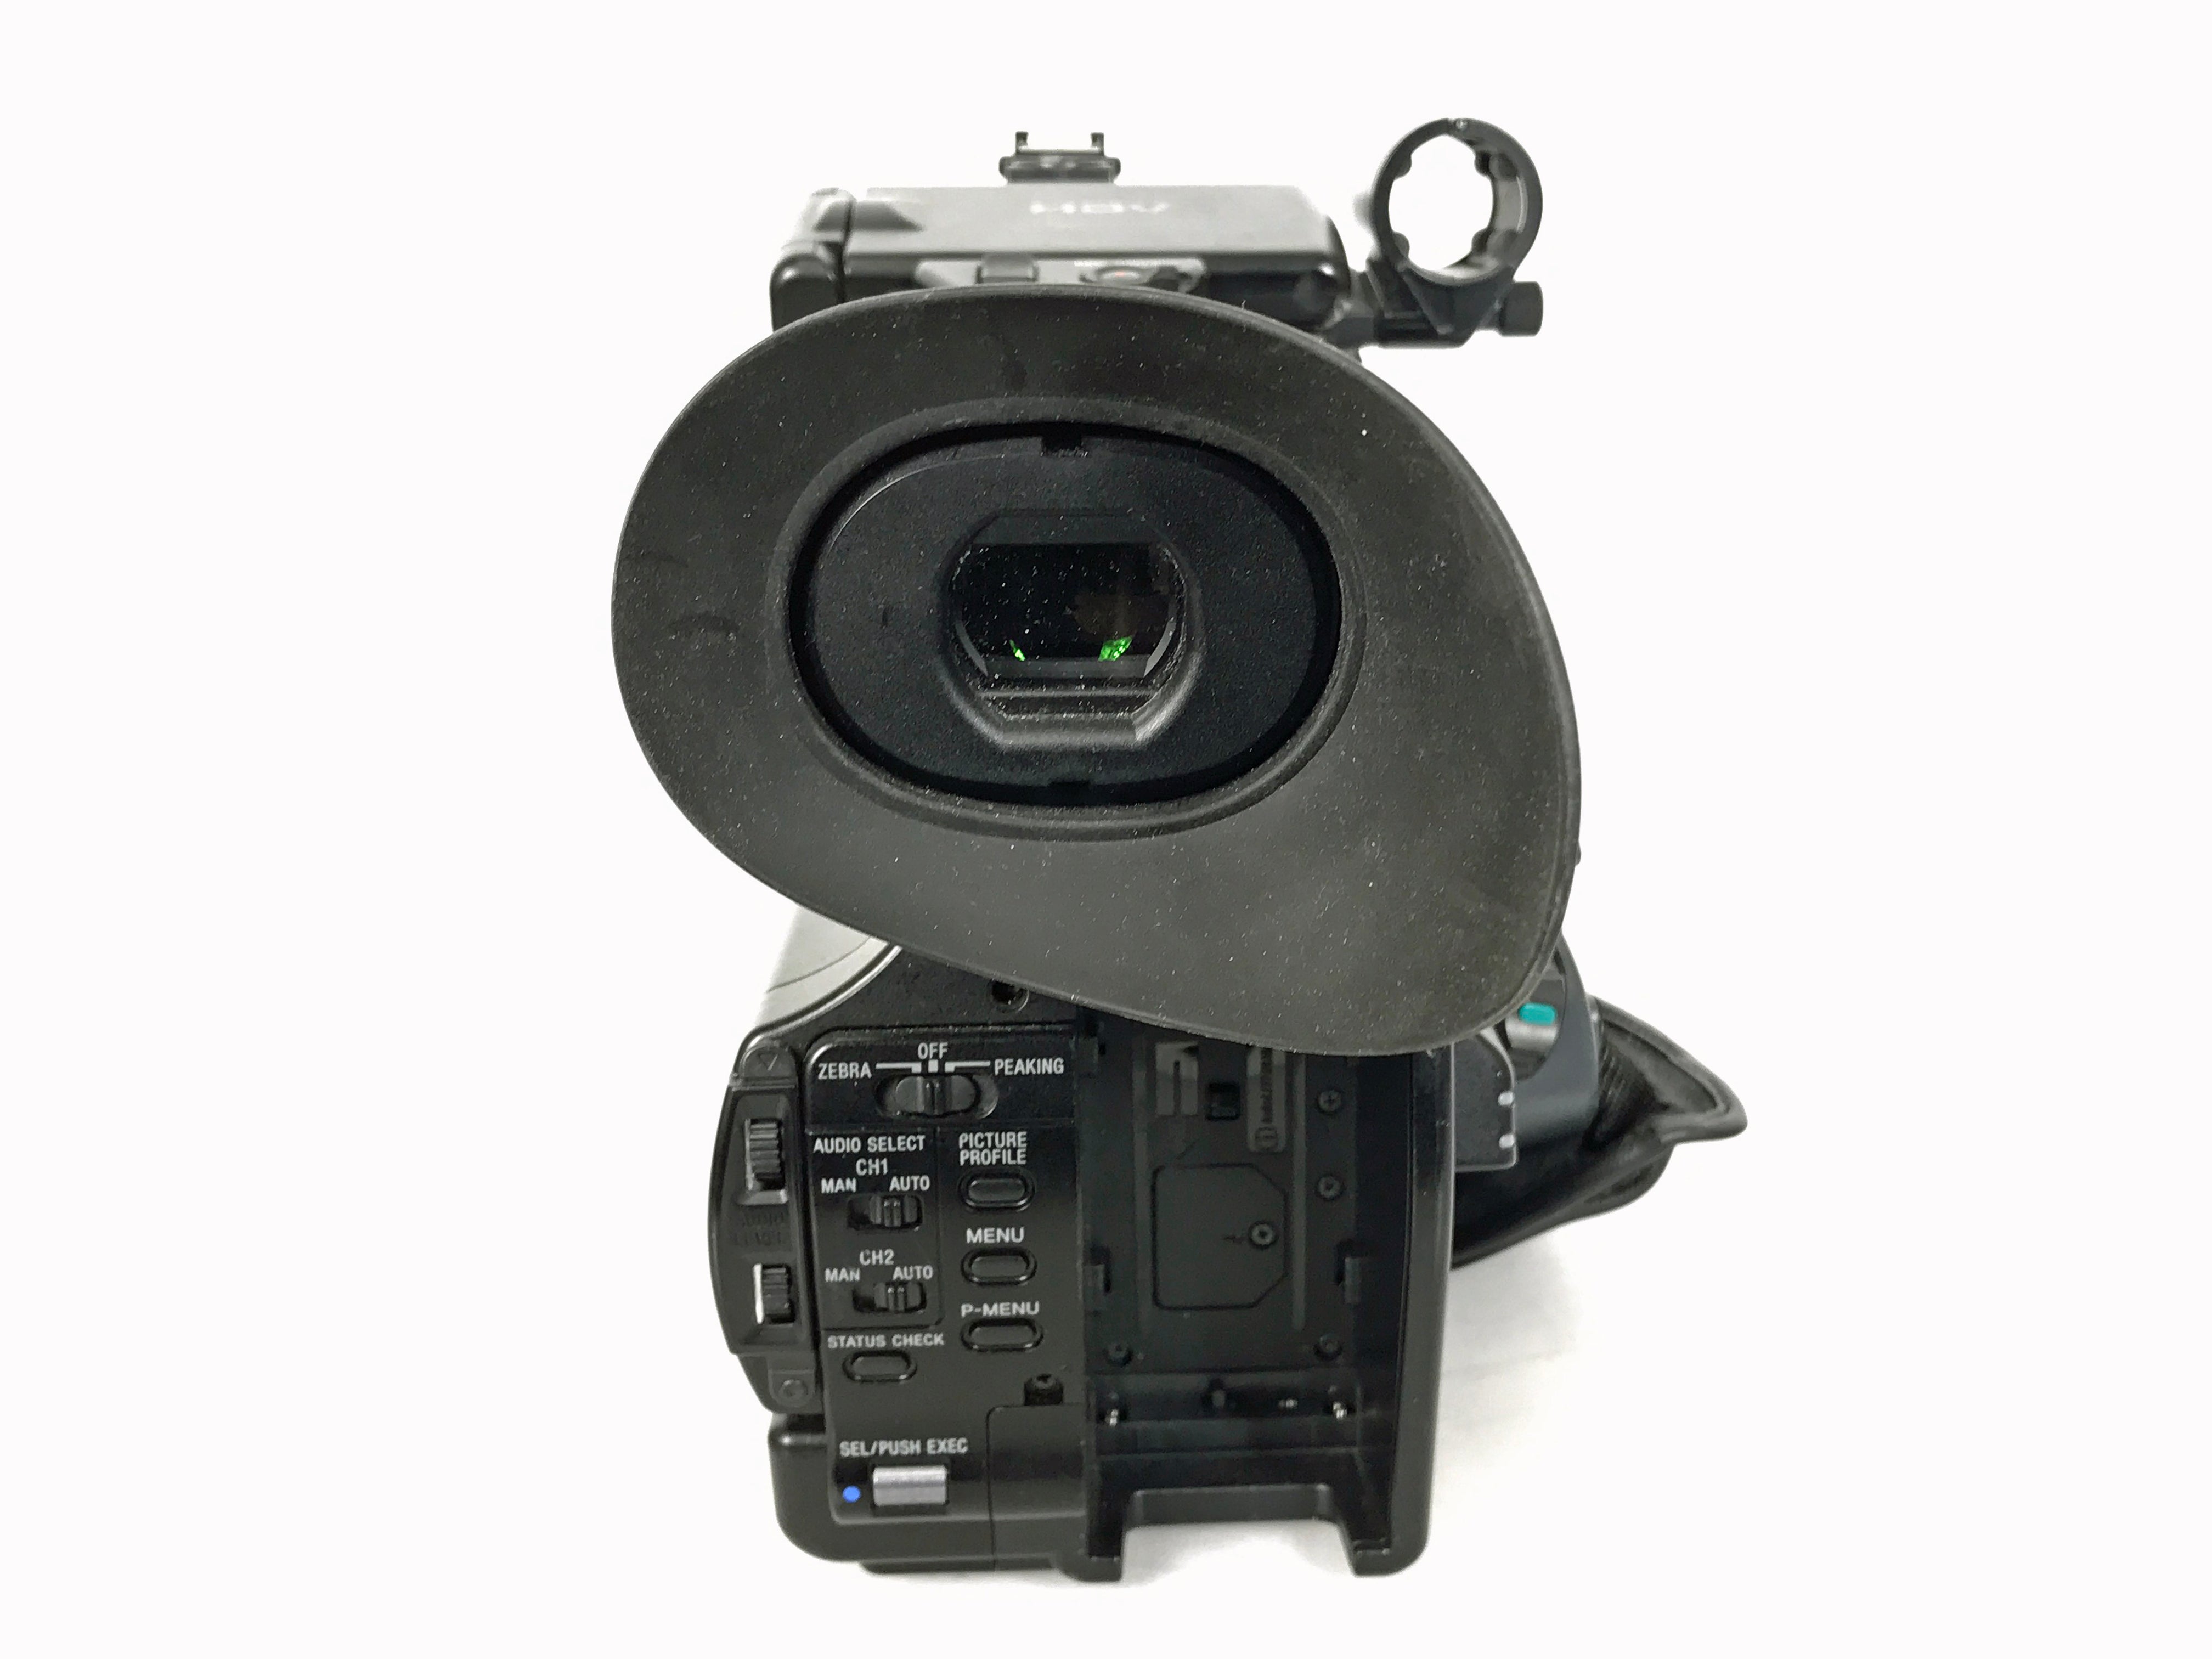 Sony HVR-Z1U 1/3" 3-CCD HDV Camcorder